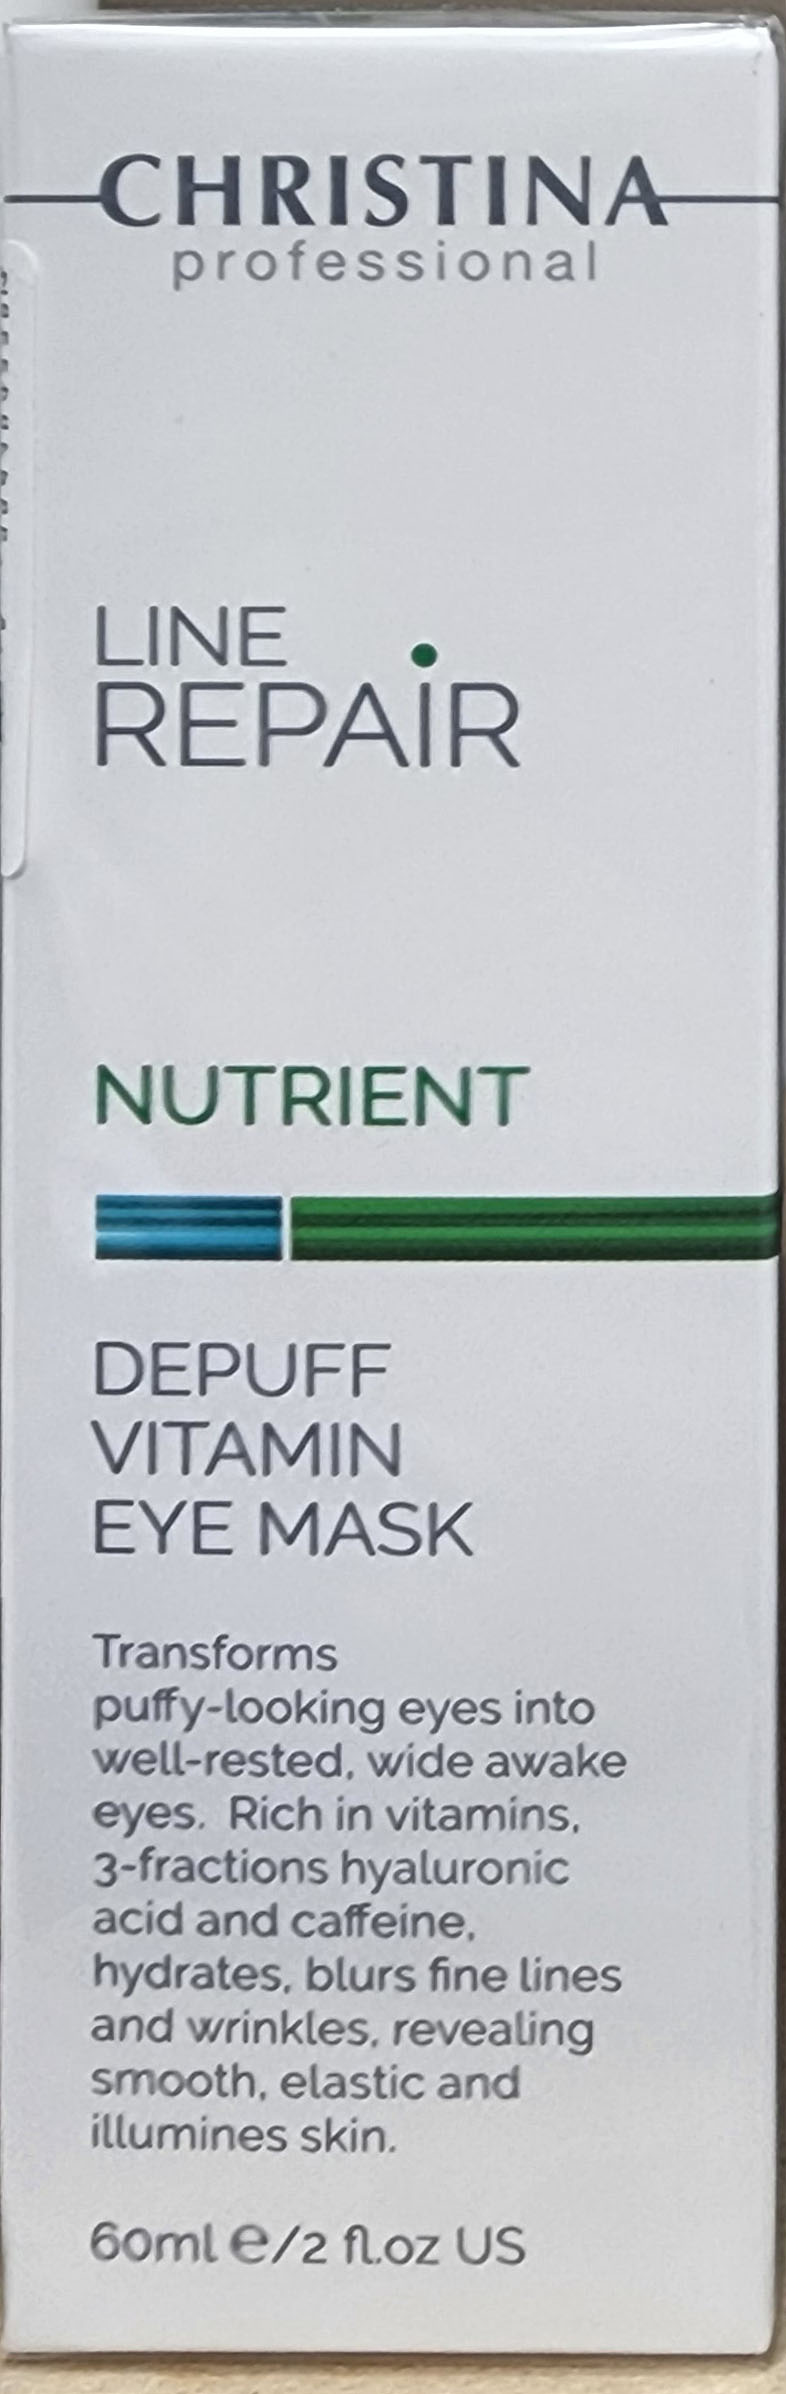 Christina Line Repair - Nutrient - Depuff Vitamin Eye Mask 60ml